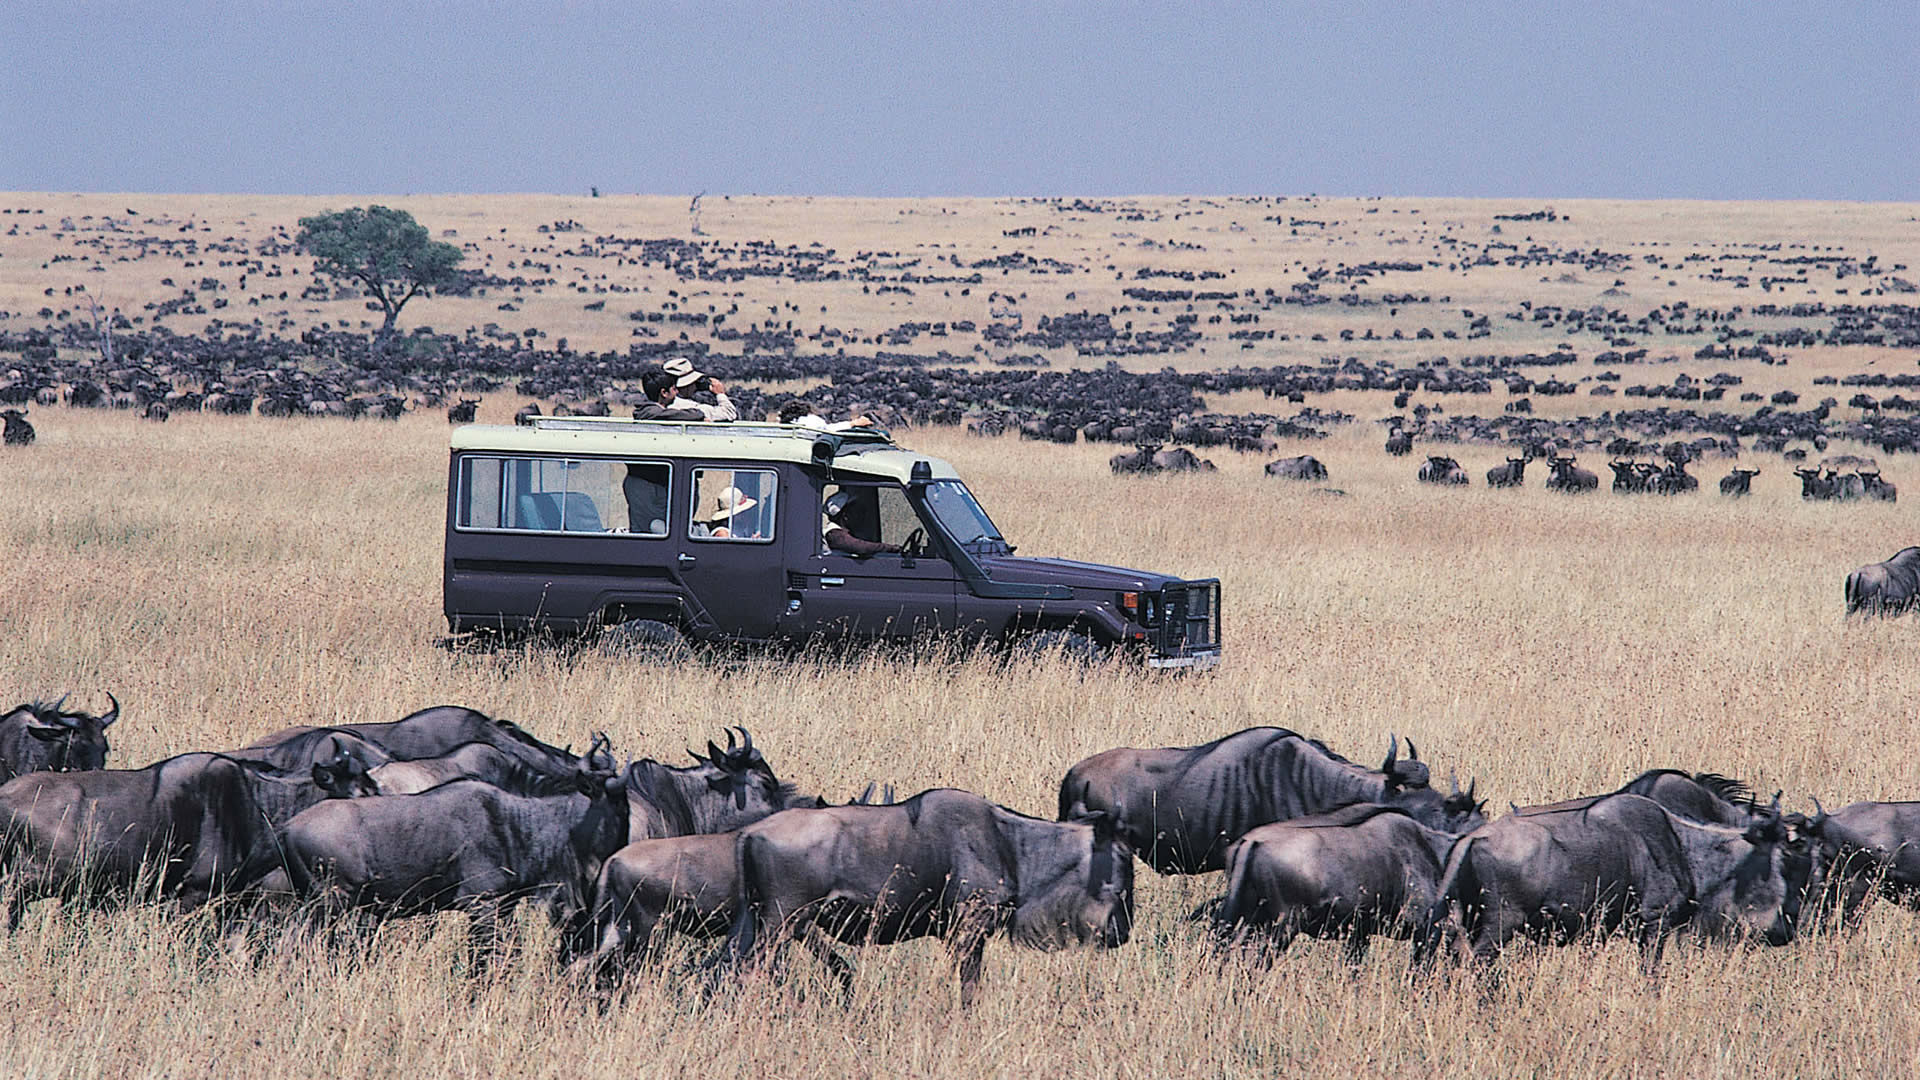 8 days Maasai Mara, Lake Nakuru and Samburu safari